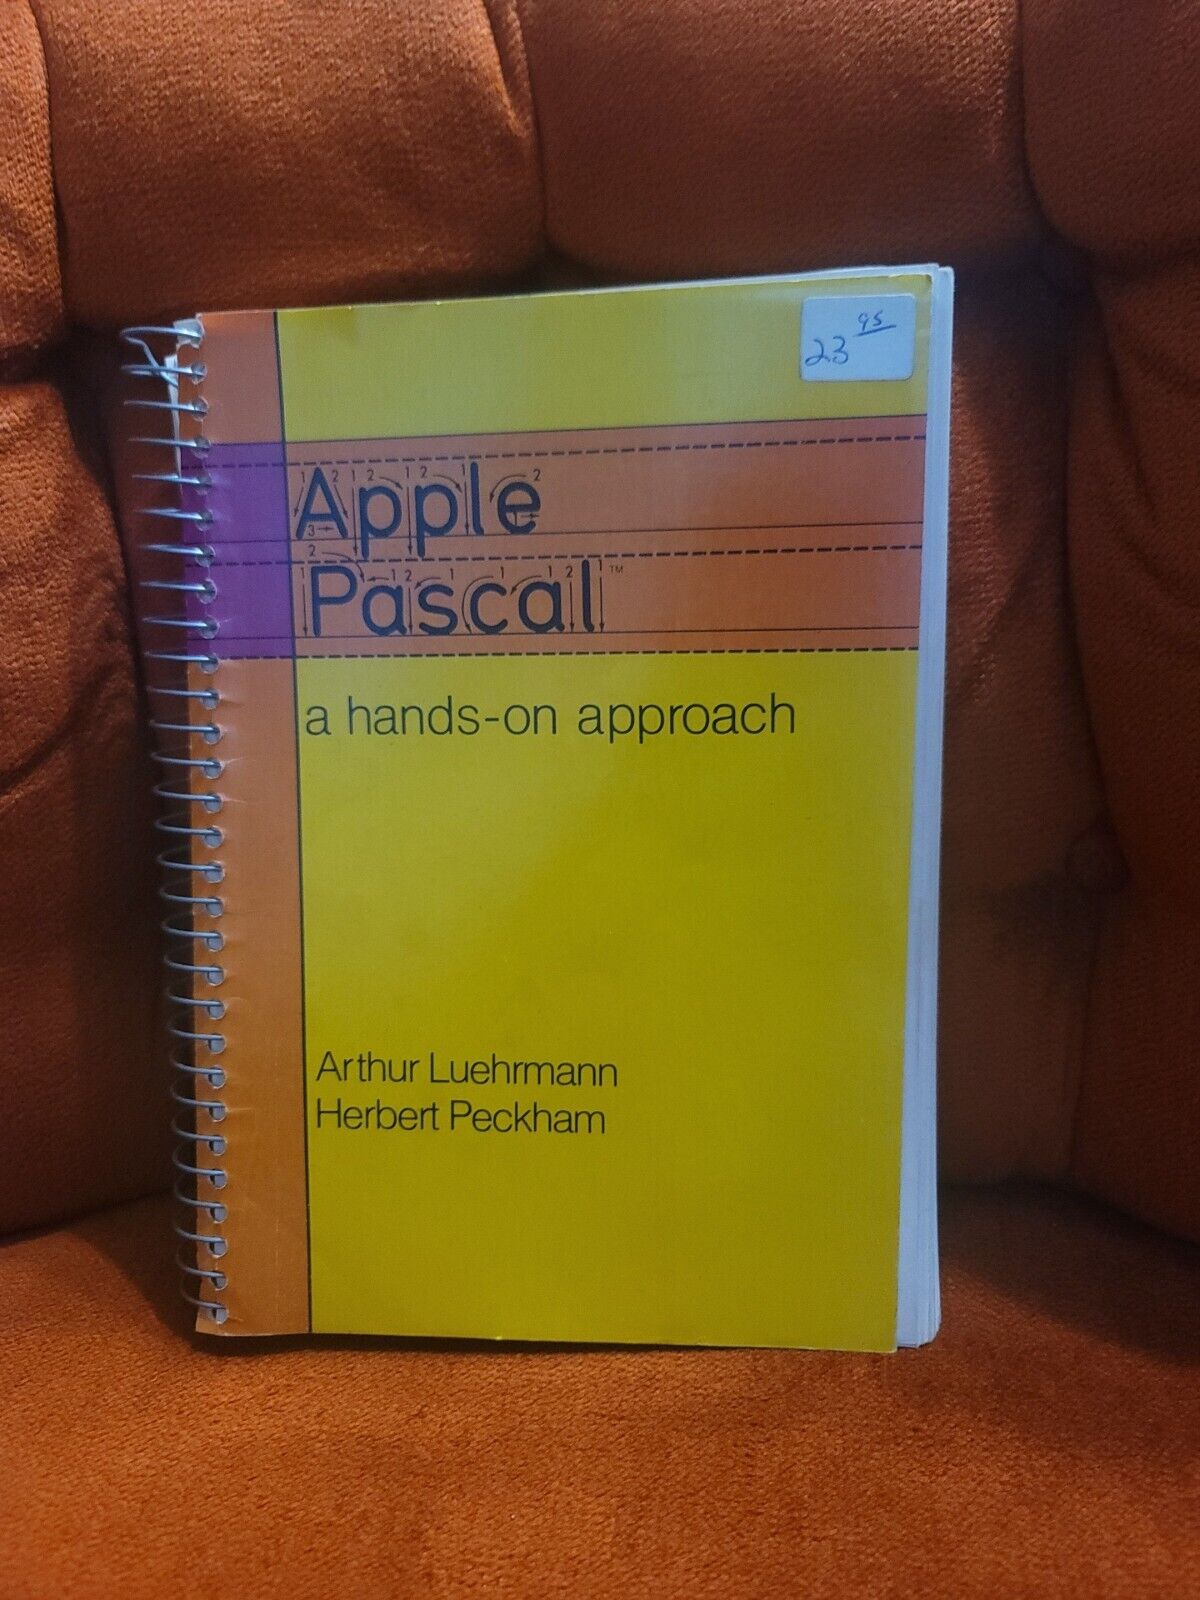 APPLE PASCAL A Hands-On Approach (Programming Language Series) Arthur Luehrmann